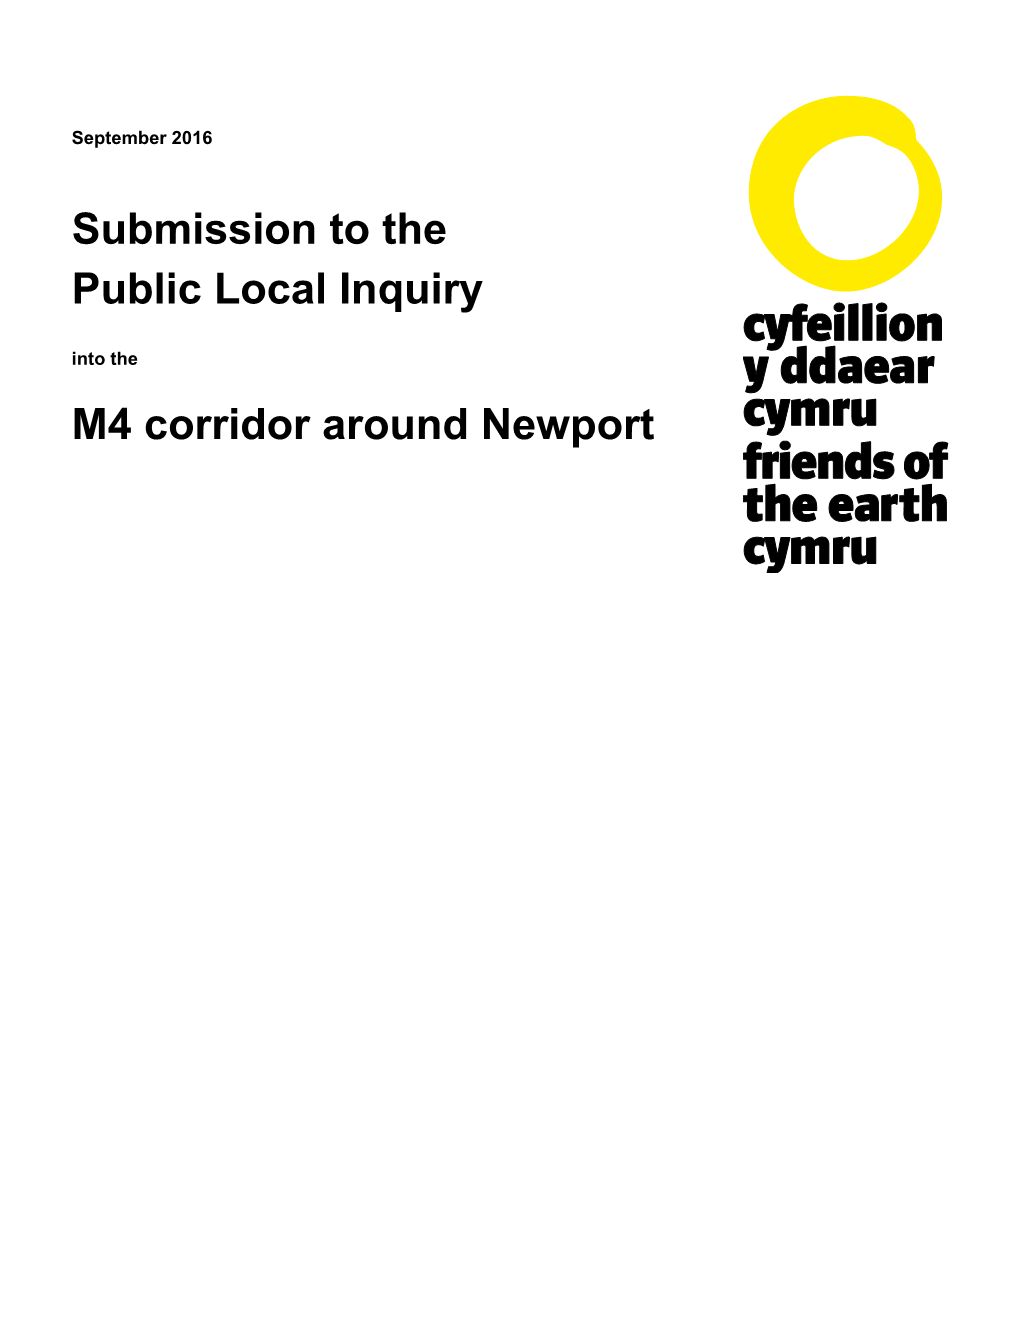 Submission to the Public Local Inquiry M4 Corridor Around Newport